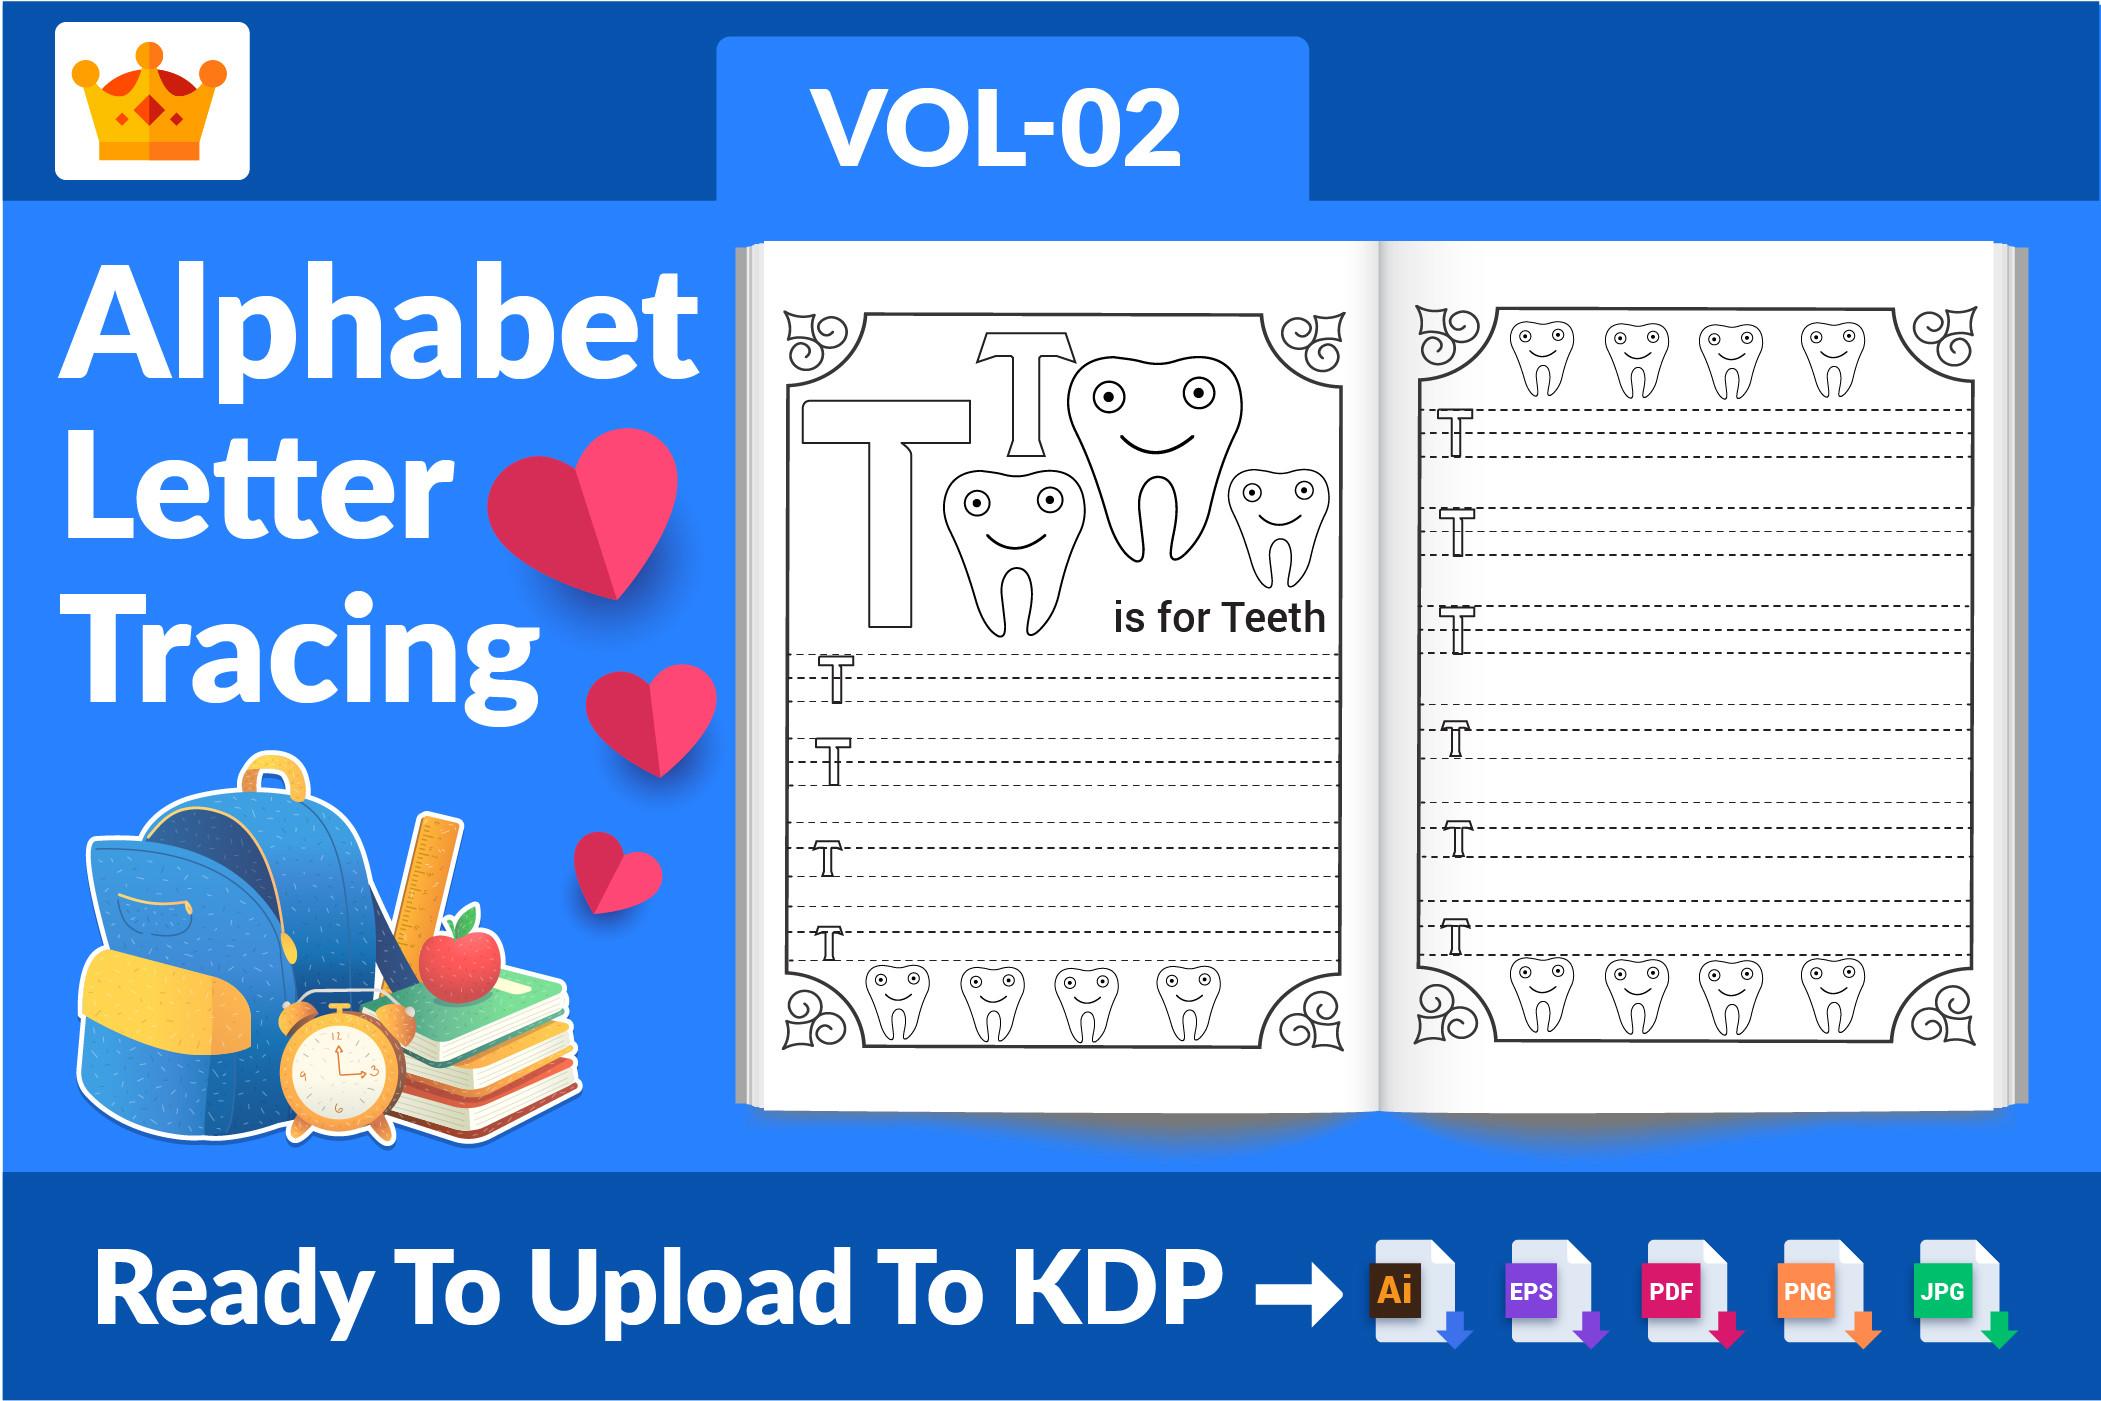 Alphabet Letter Tracing KDP Interior 02